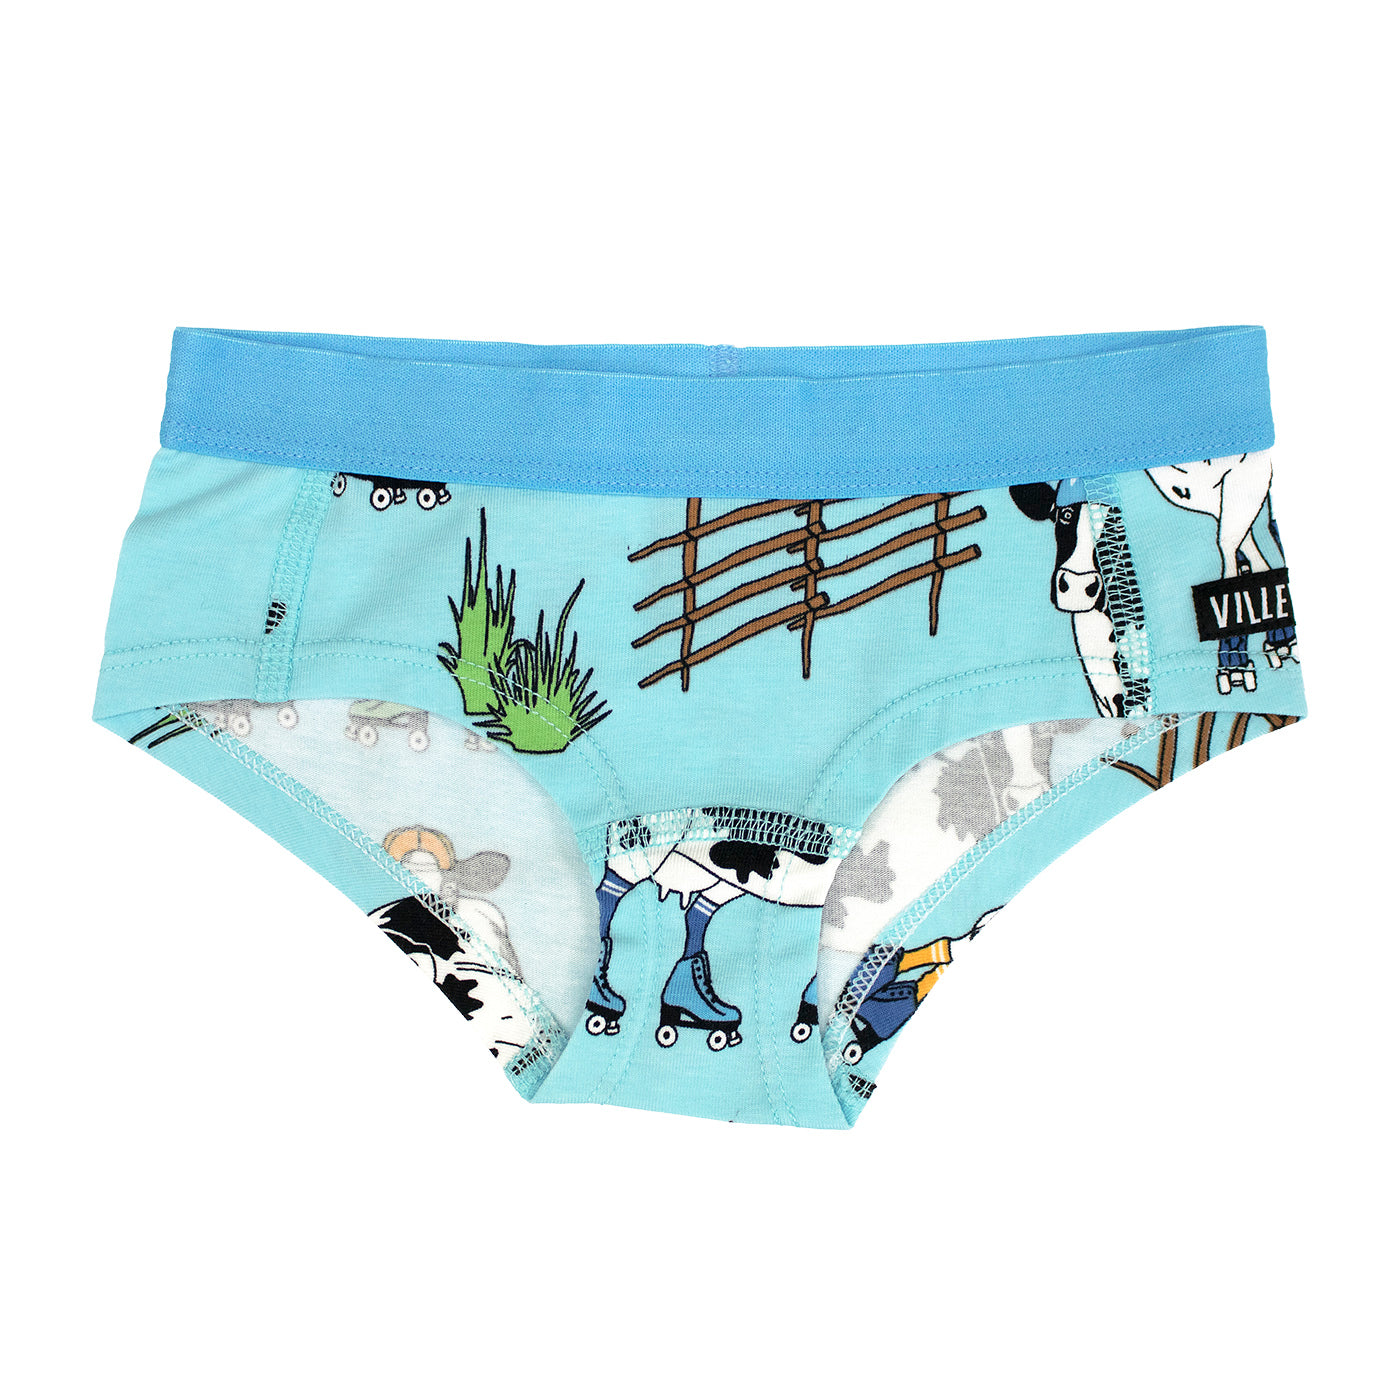 Villervalla - Underwear - Briefs - Roller Cow - Aqua